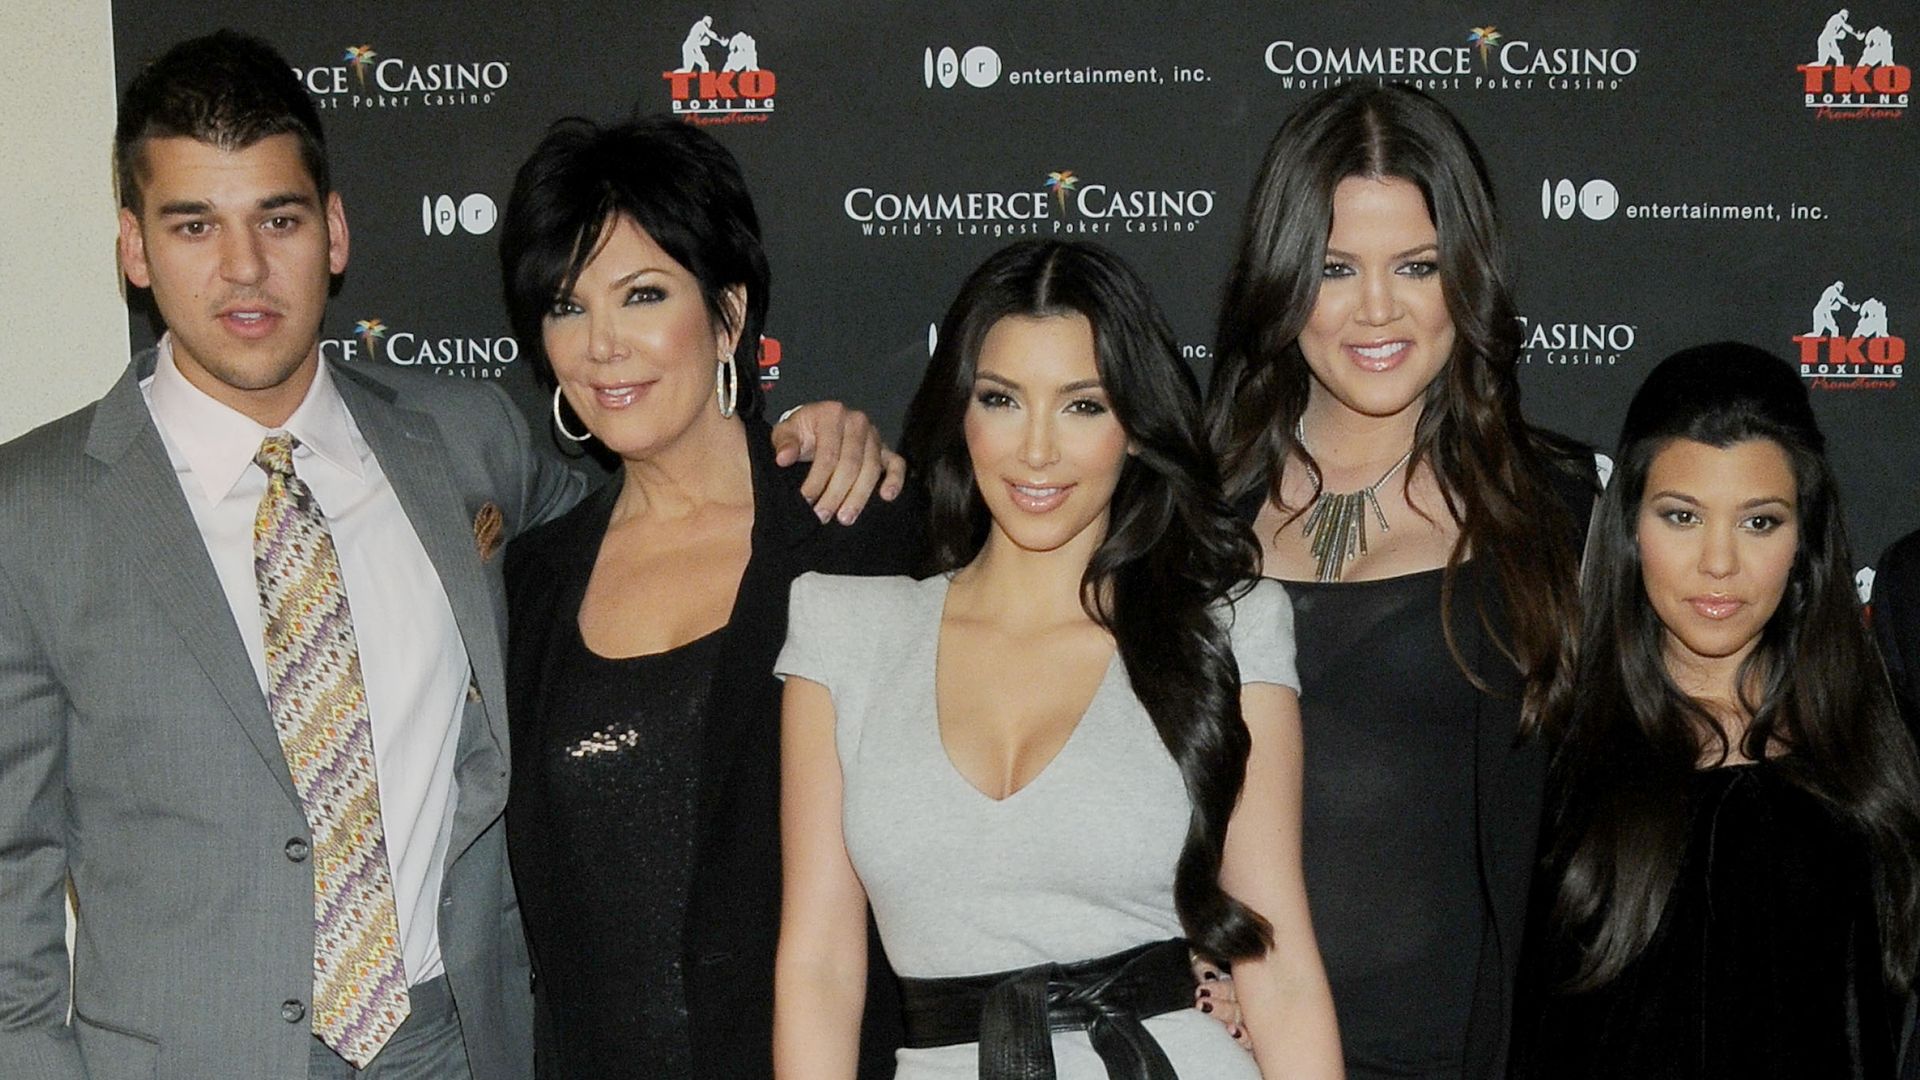 Rob Kardashian, Kris Jenner, Kim Kardashian, Khloe Kardashian, Kourtney Kardashian arrive at the "Kardashian Charity Knock Out" at the Commerce Casino on November 3, 2009 in Commerce, California